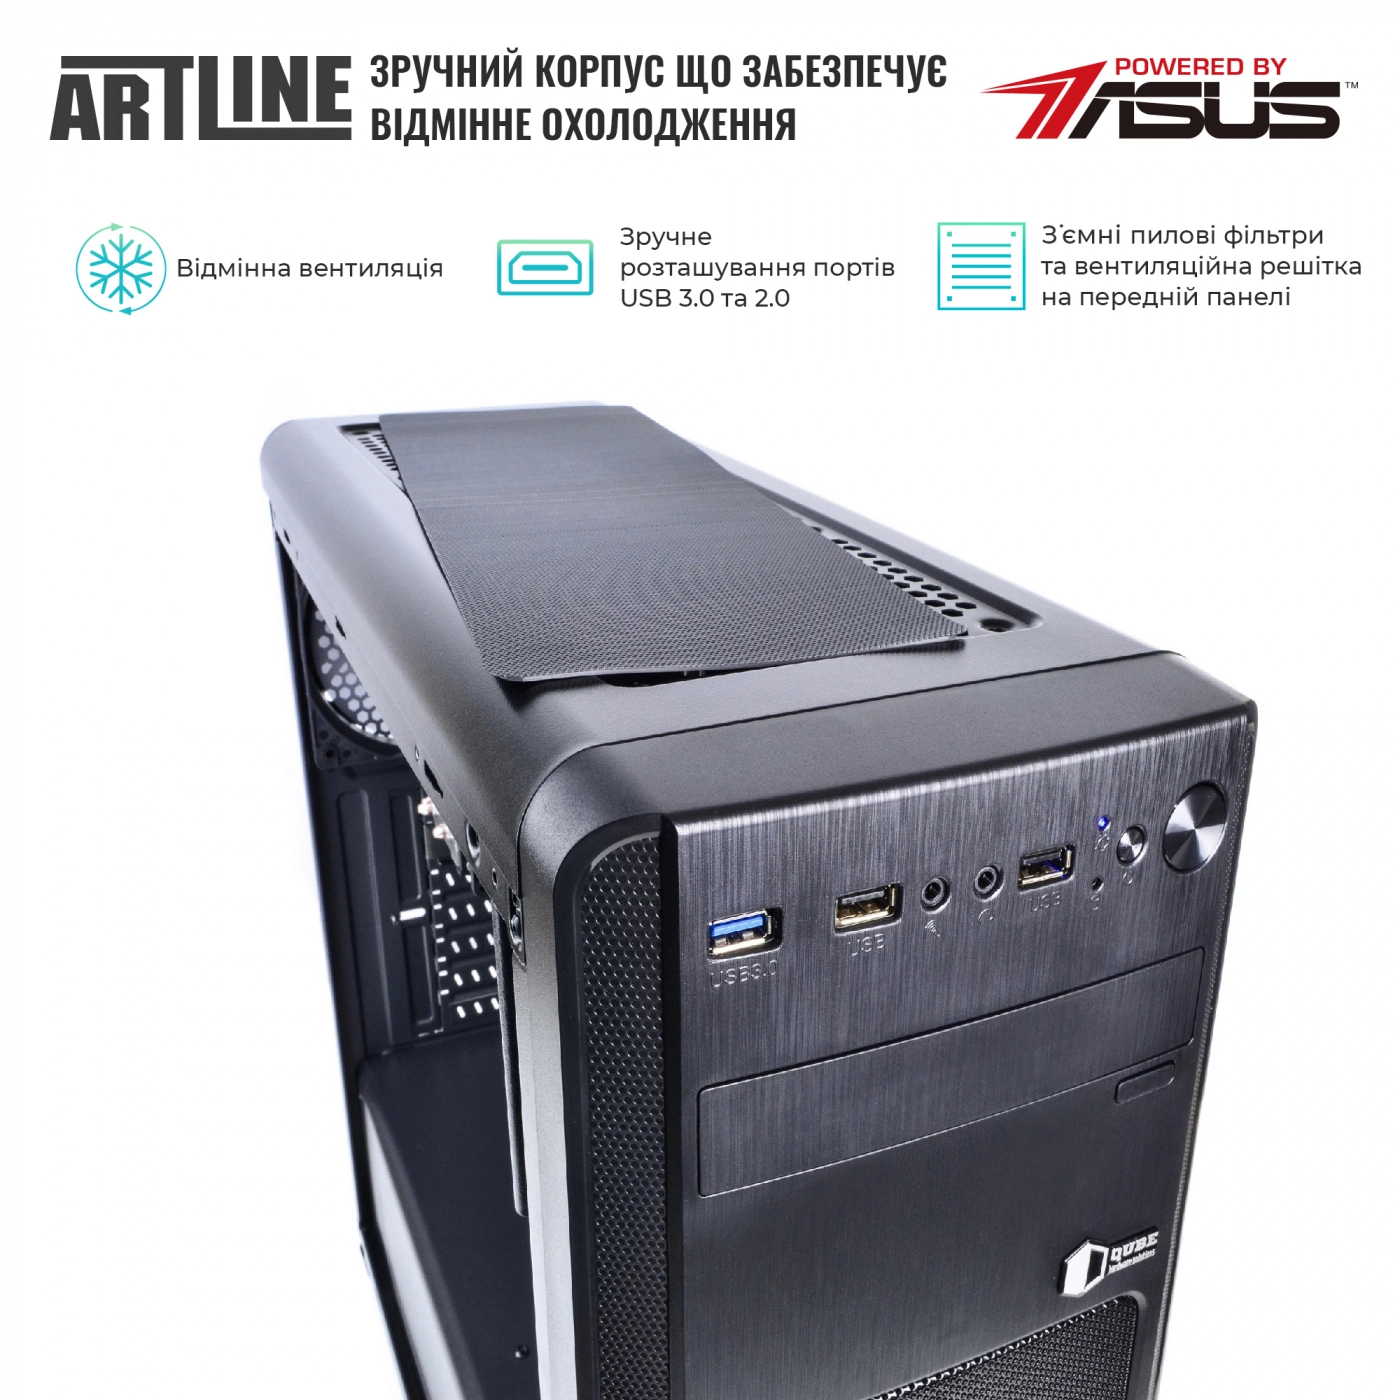 Купити Сервер ARTLINE Business T25v32 - фото 4